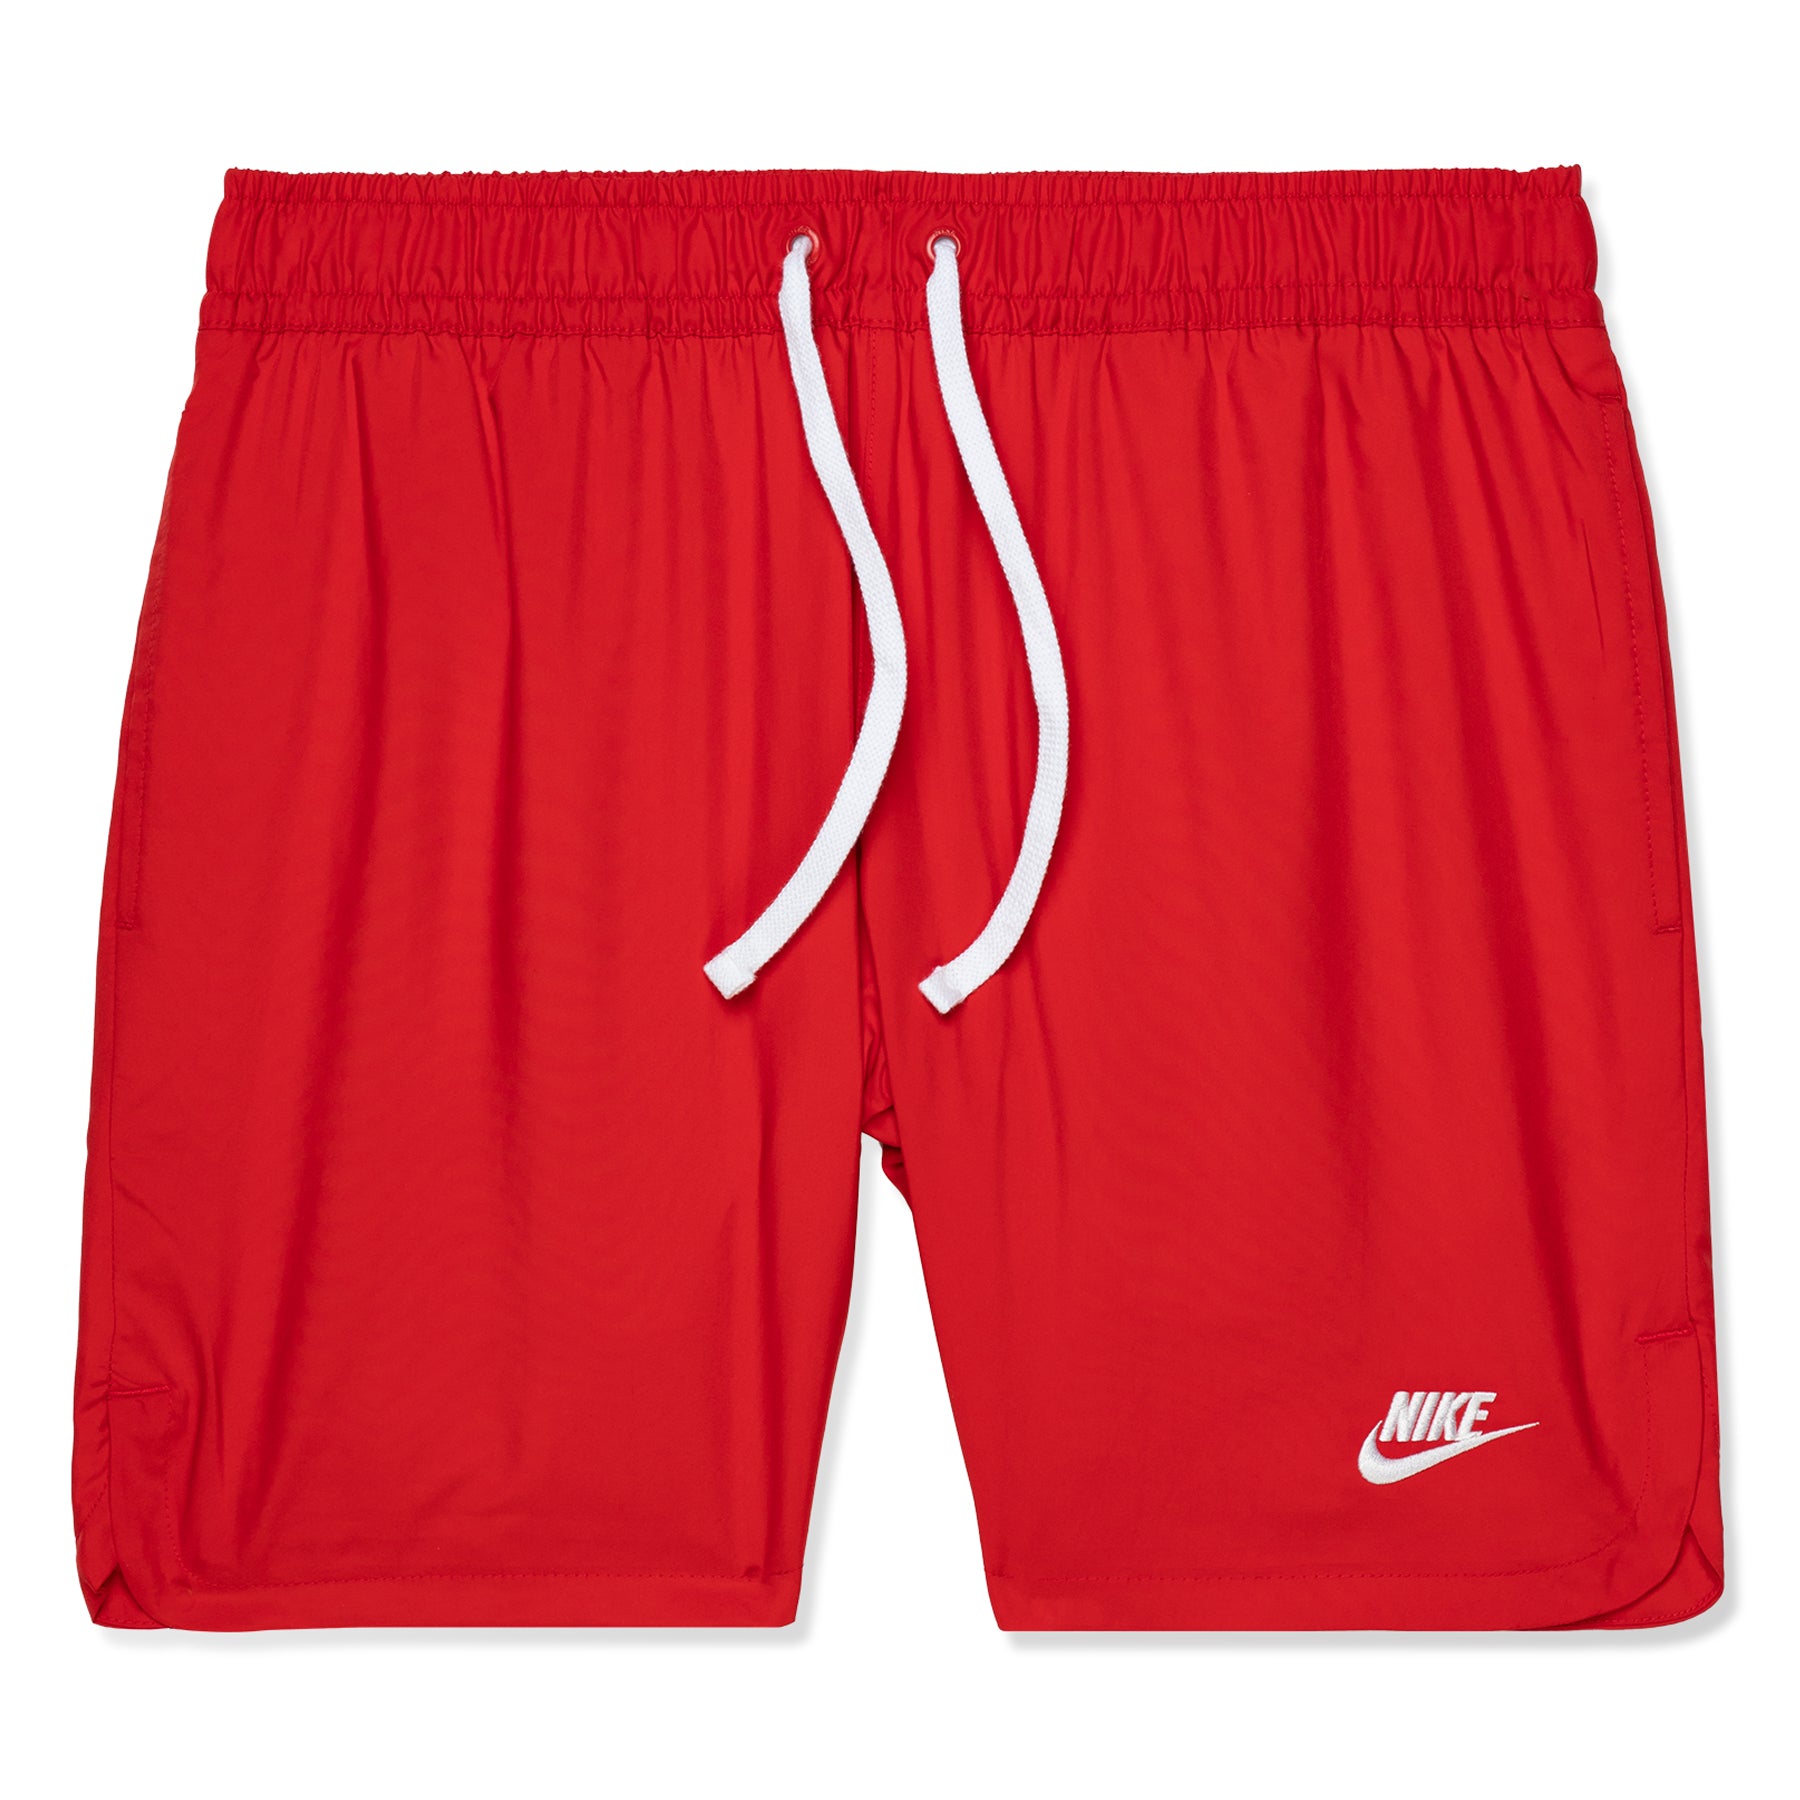 Nike Sportswear Essentials Shorts (University Red/White)